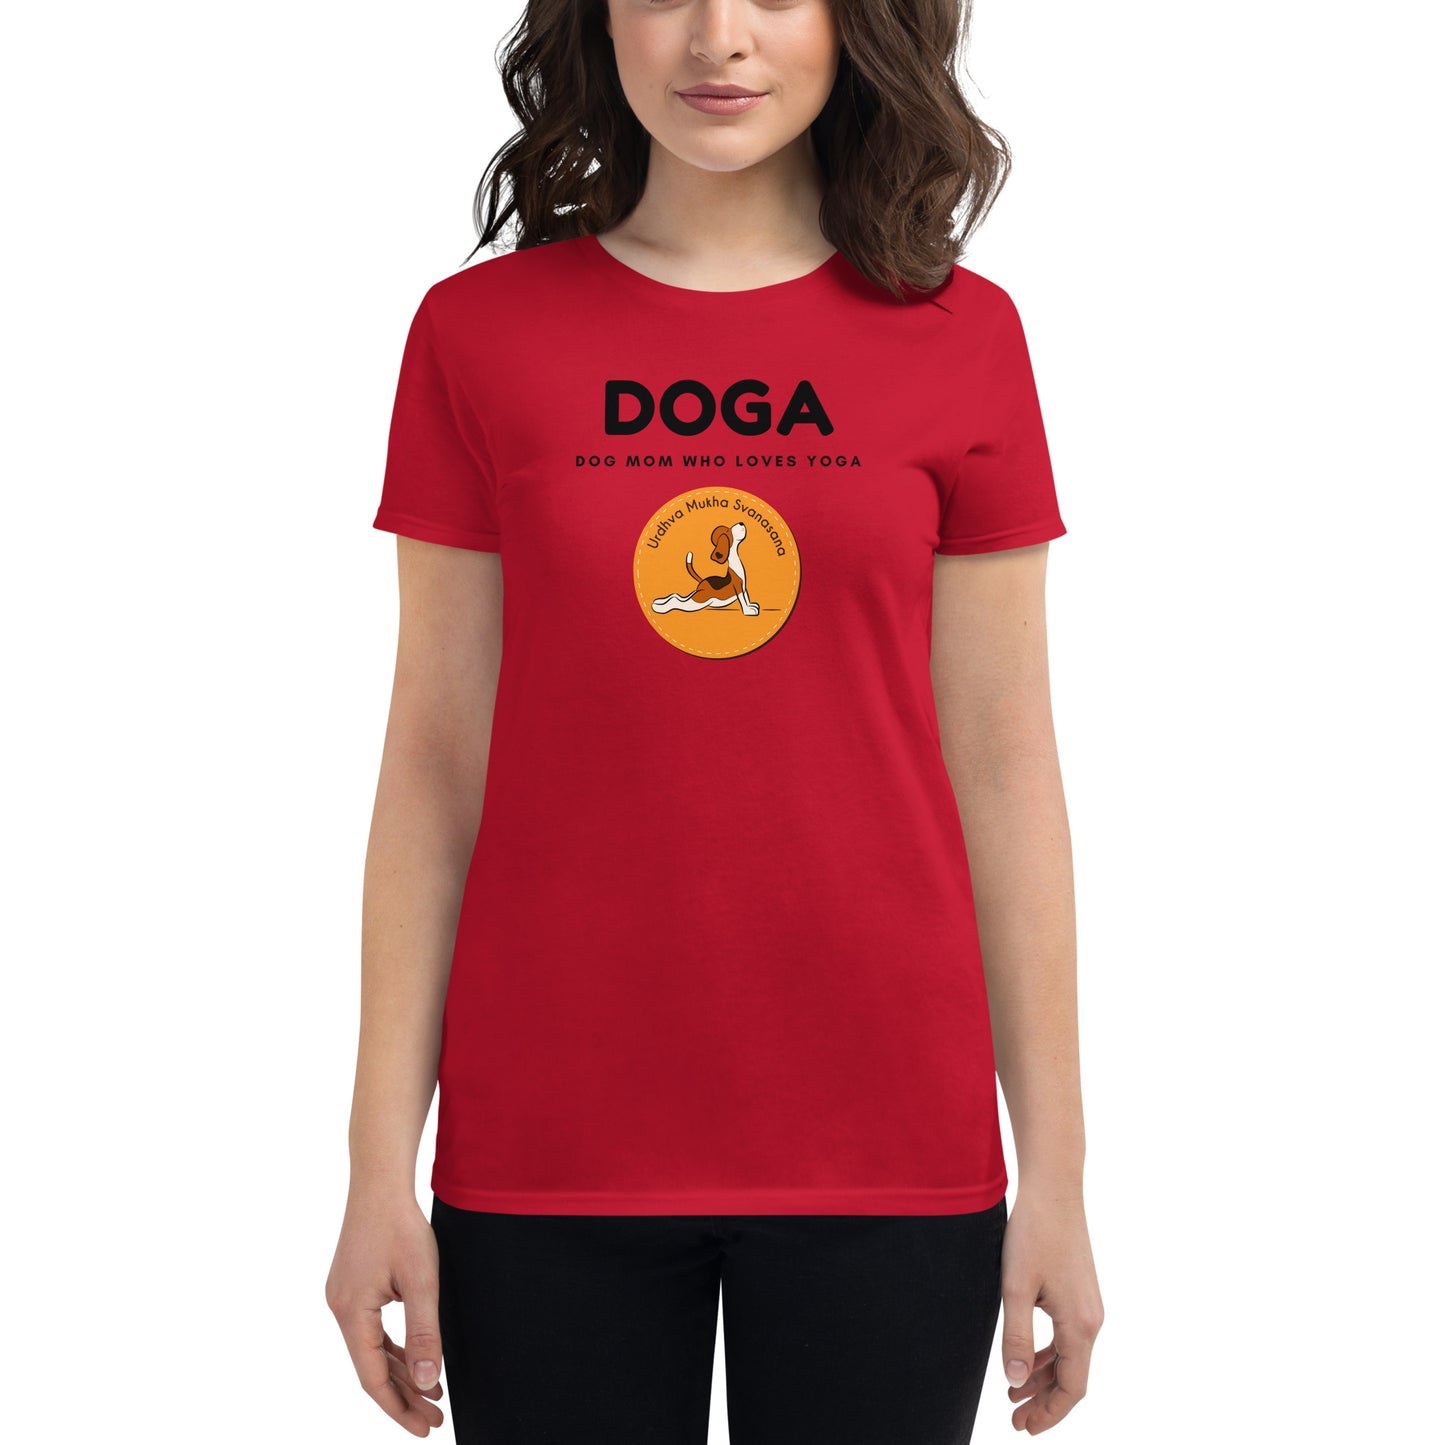 DOGA Dog Mom Shirt - Women's Short-Sleeve T-Shirt, Apparel